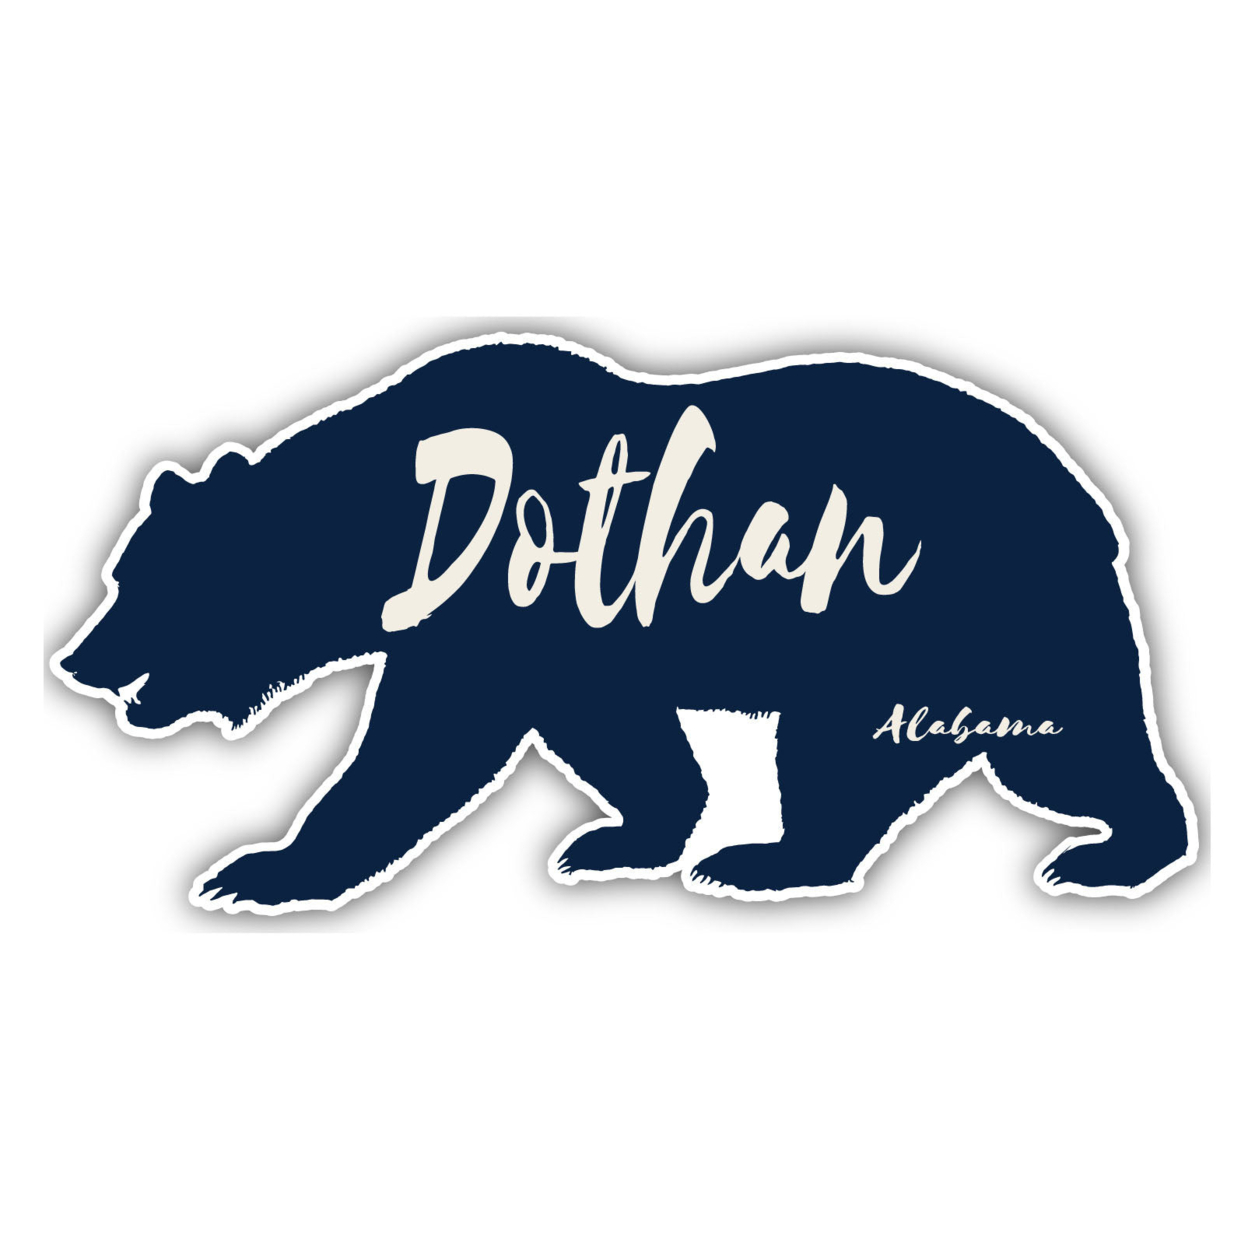 Dothan Alabama Souvenir Decorative Stickers (Choose Theme And Size) - Single Unit, 8-Inch, Bear